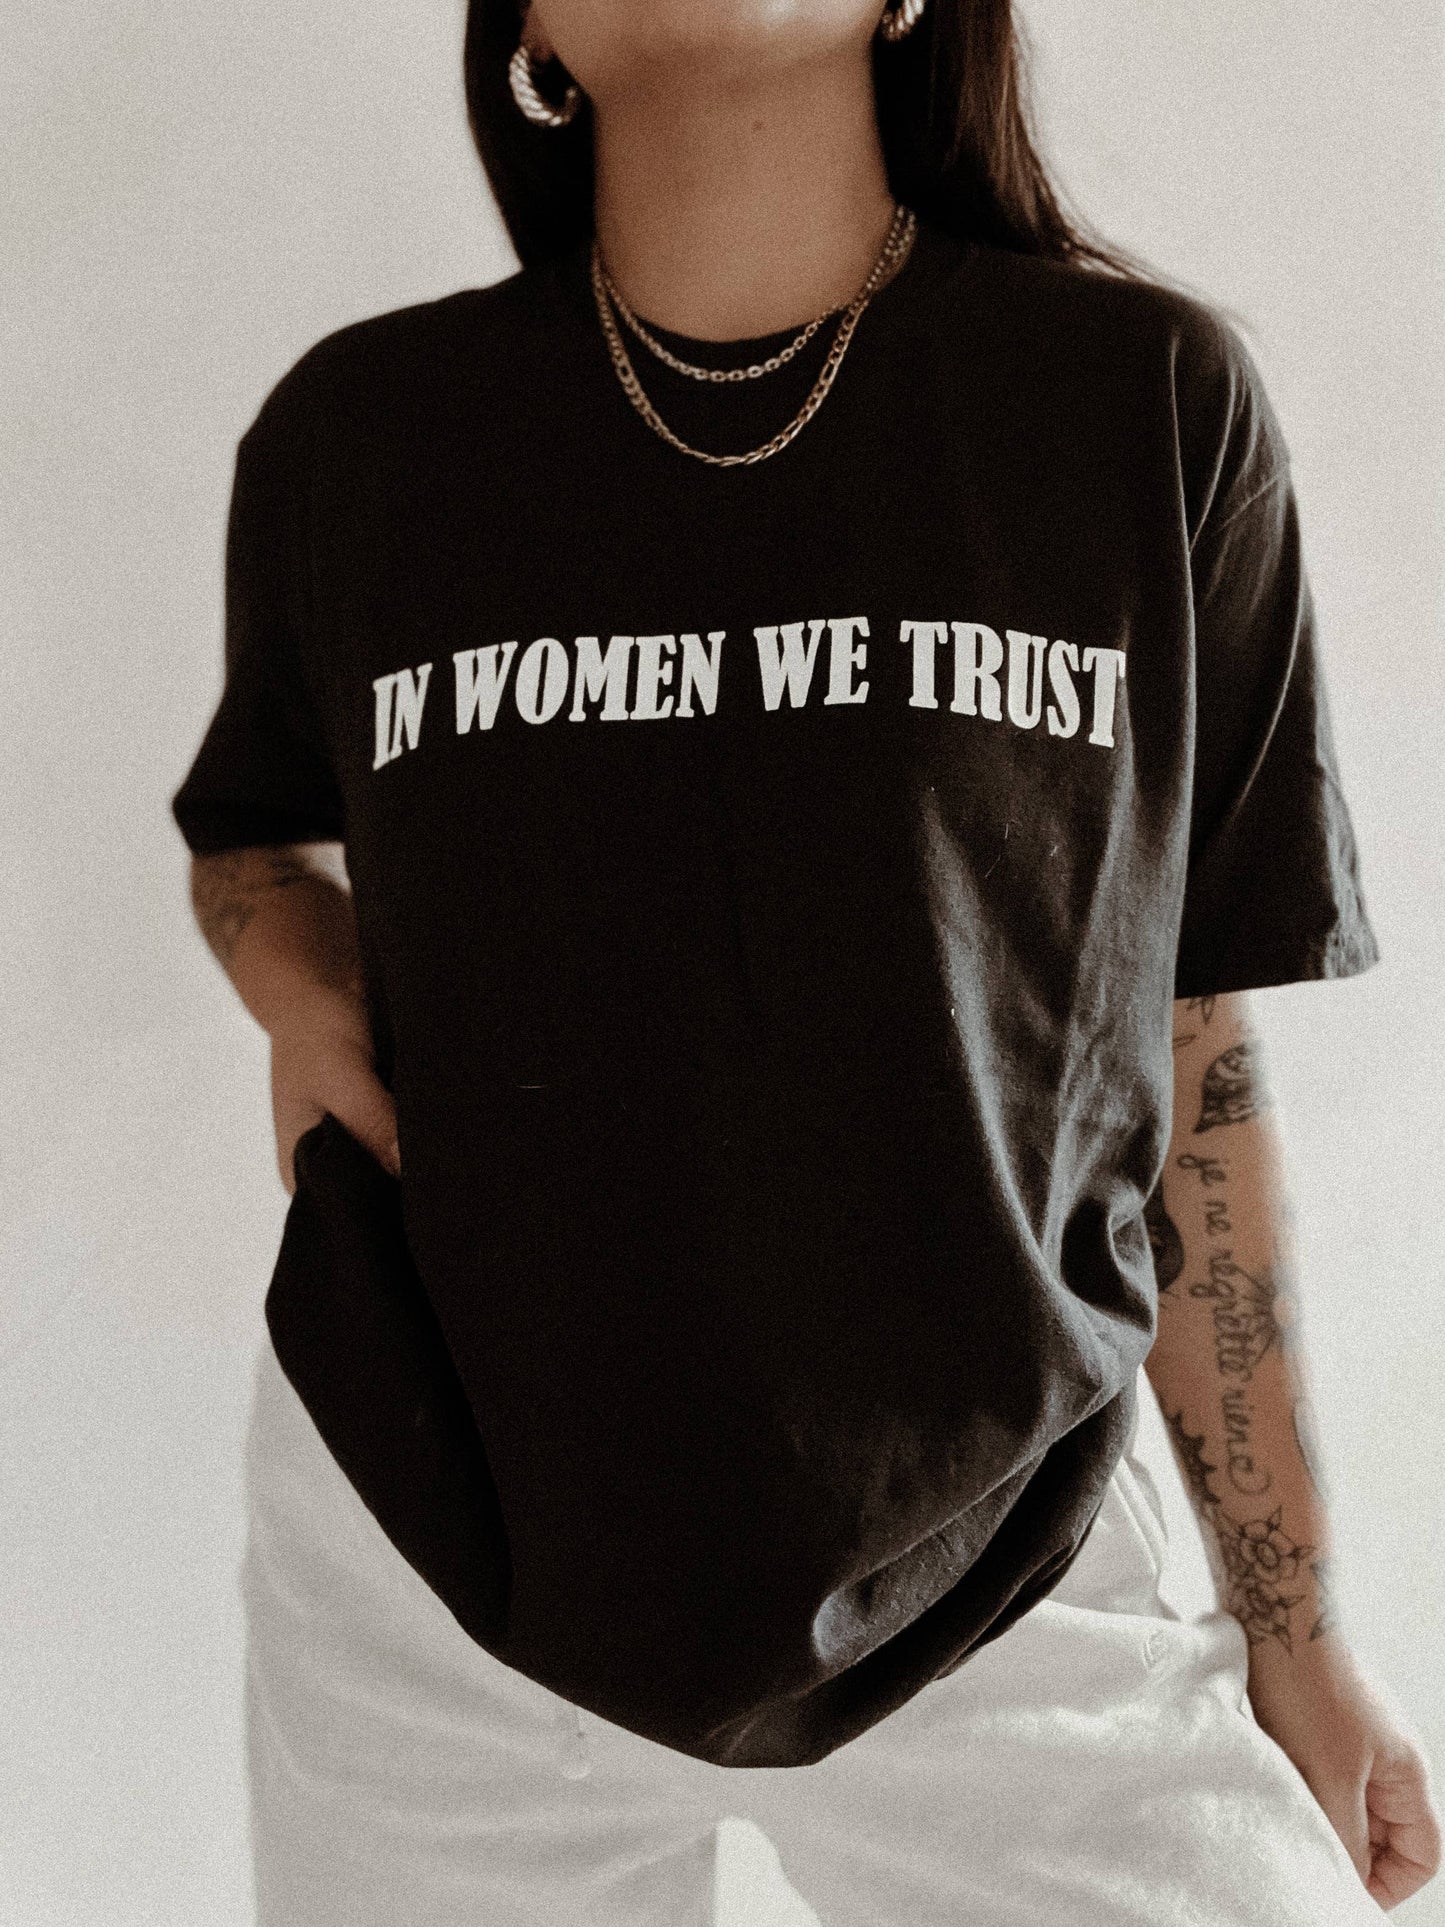 In Women We Trust | We The Babes